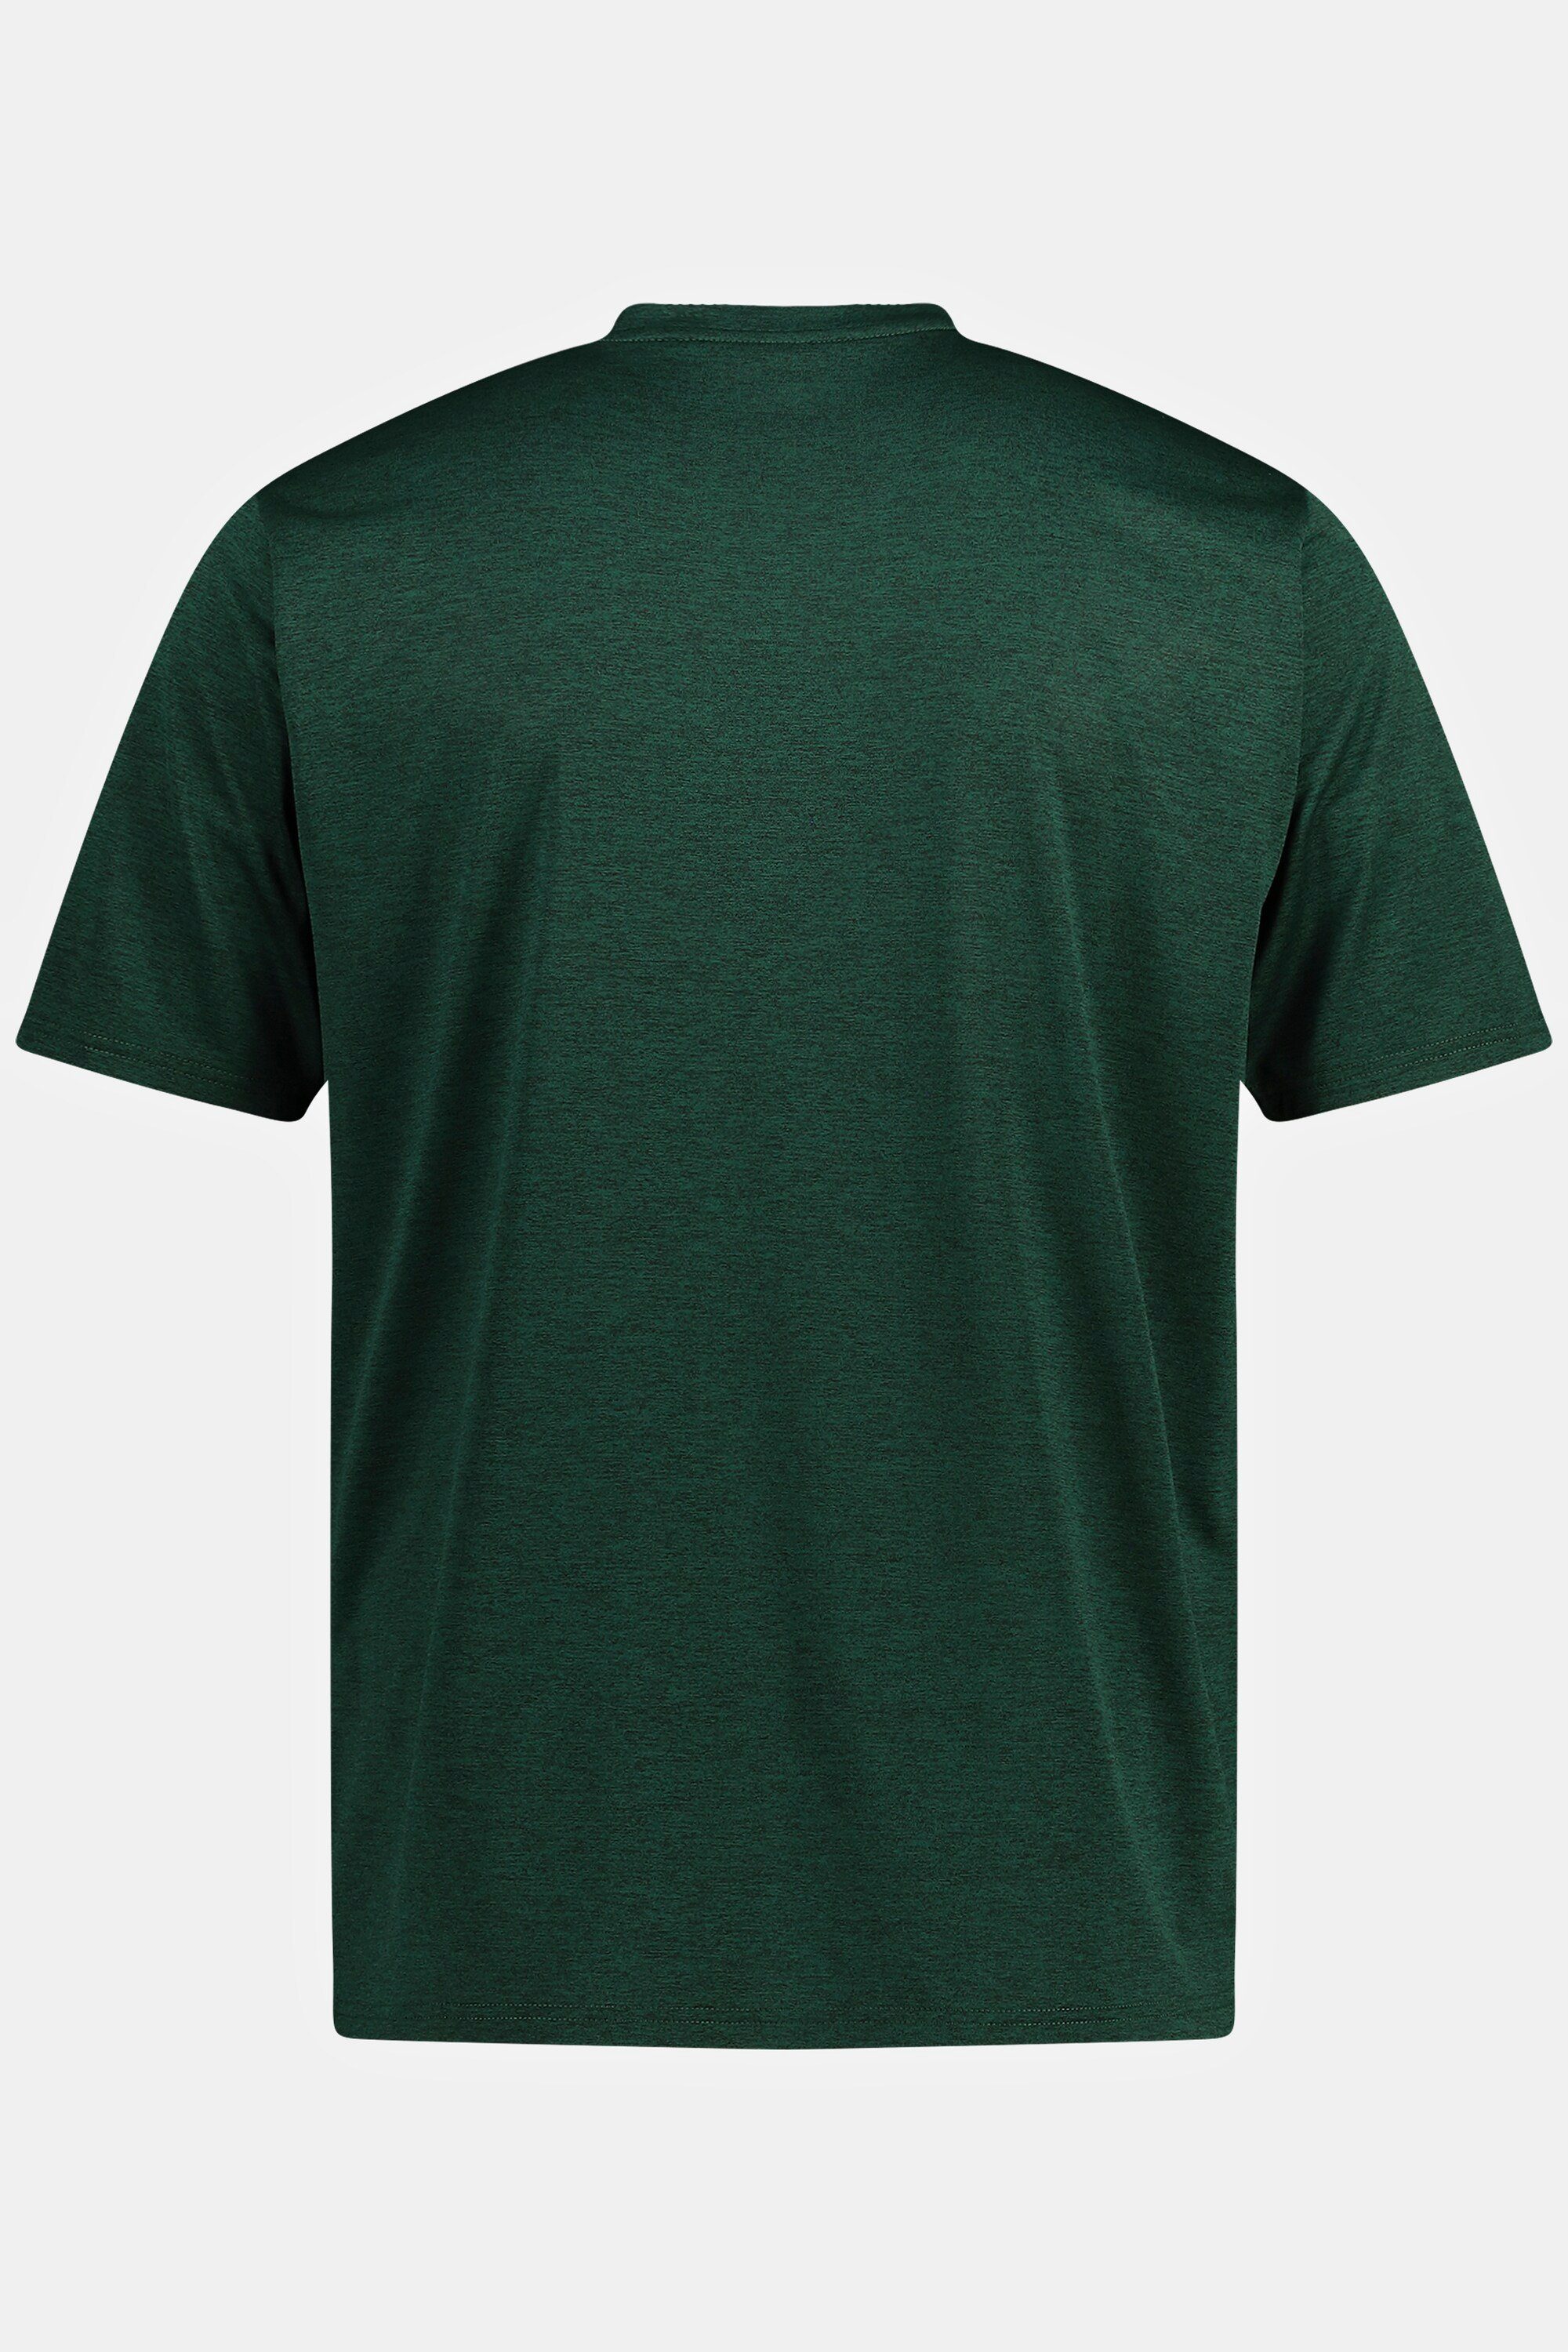 JP1880 T-Shirt Funktions-Shirt FLEXNAMIC® Halbarm QuickDry flaschengrün